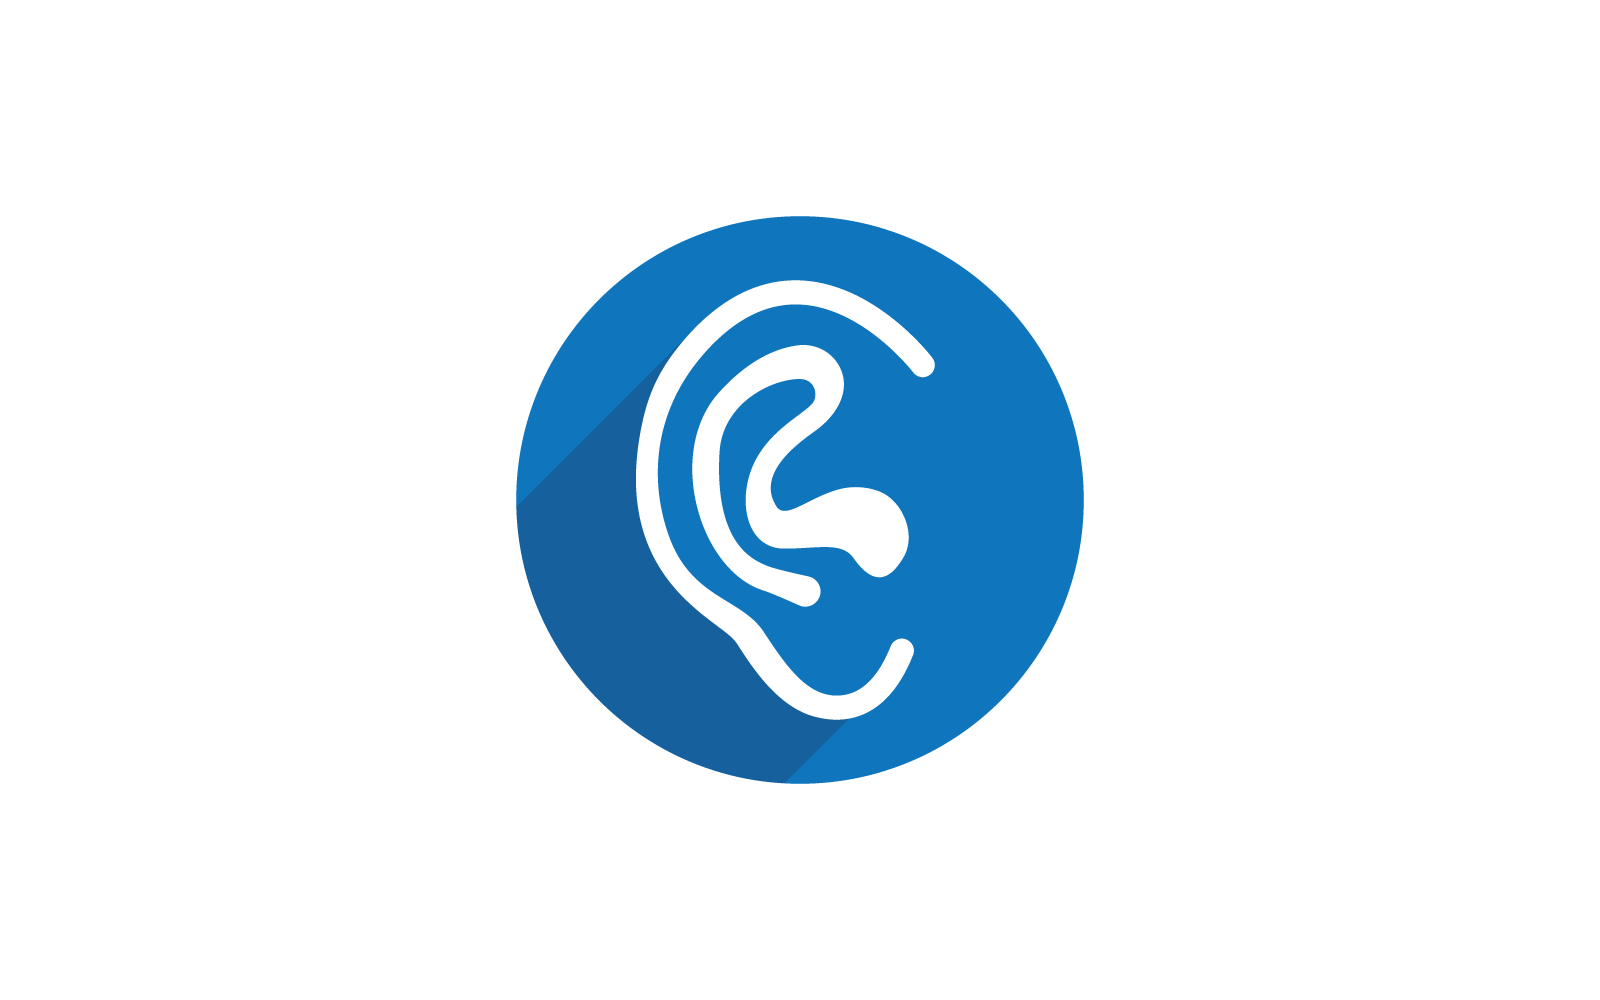 Hearing illustration design vector template